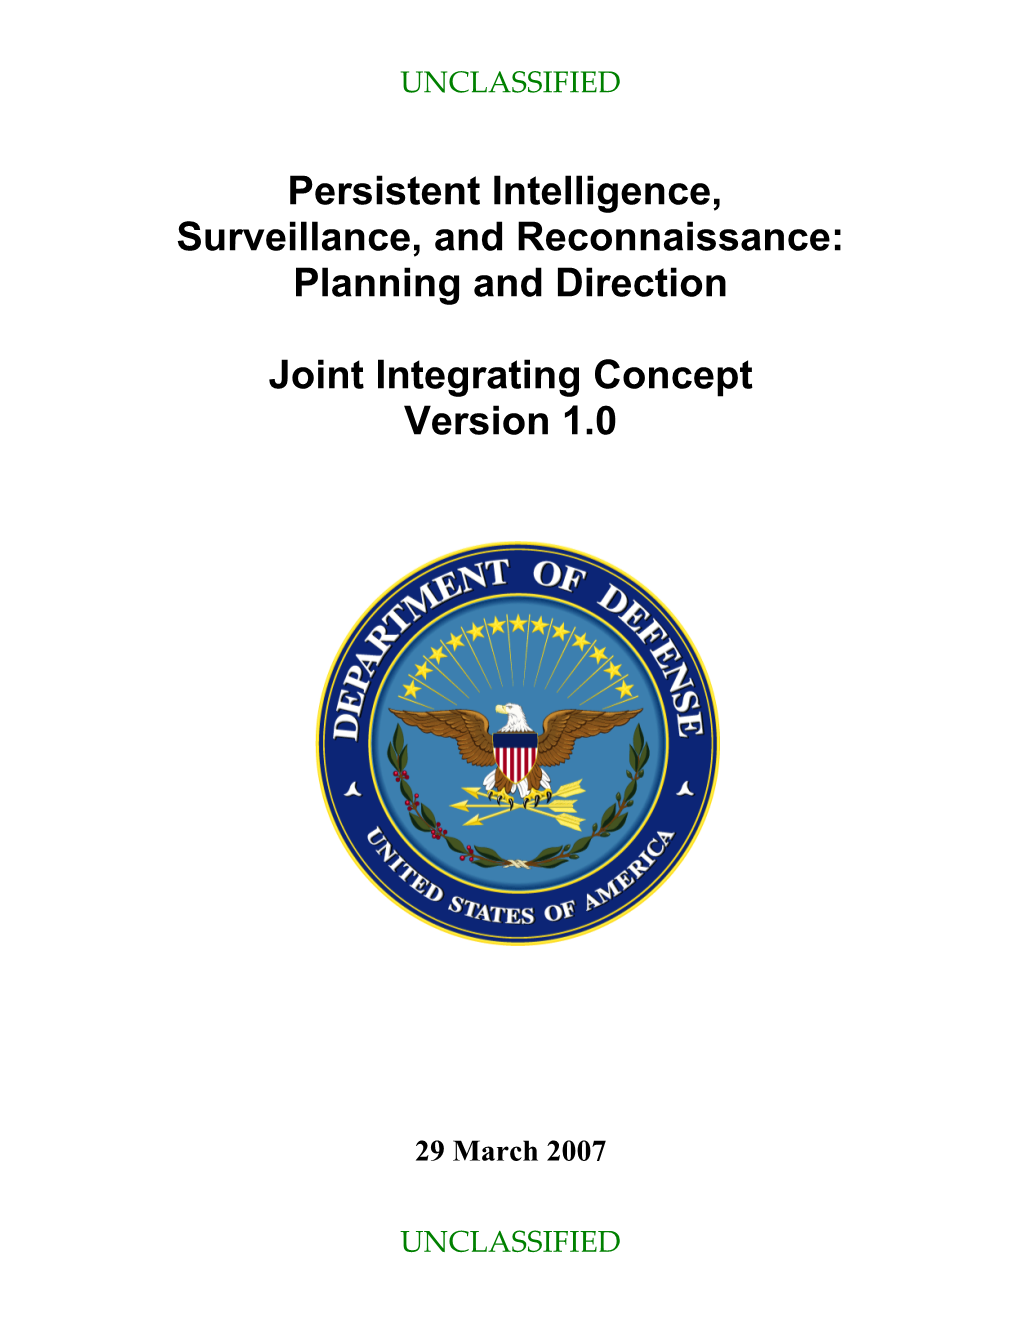 Persistent Intelligence, Surveillance, and Reconnaissance